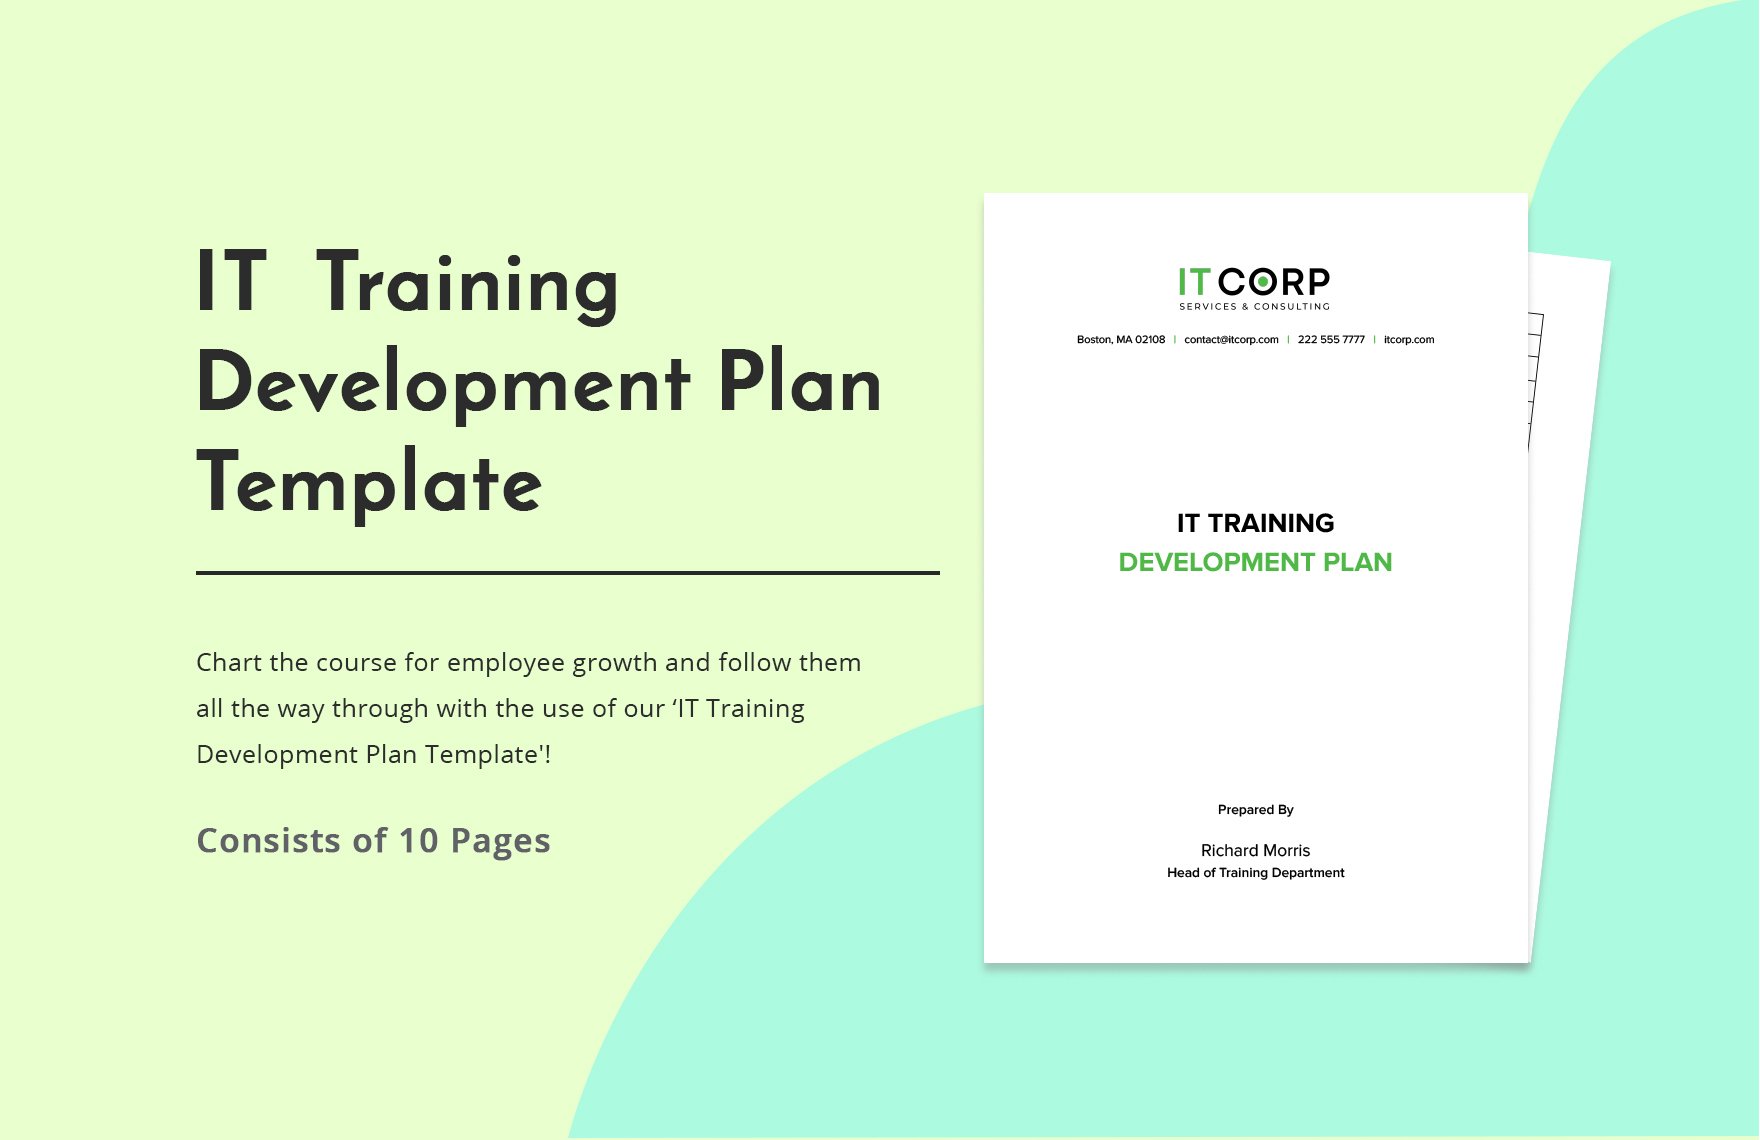 IT Training Development Plan Template in Word, Google Docs, PDF